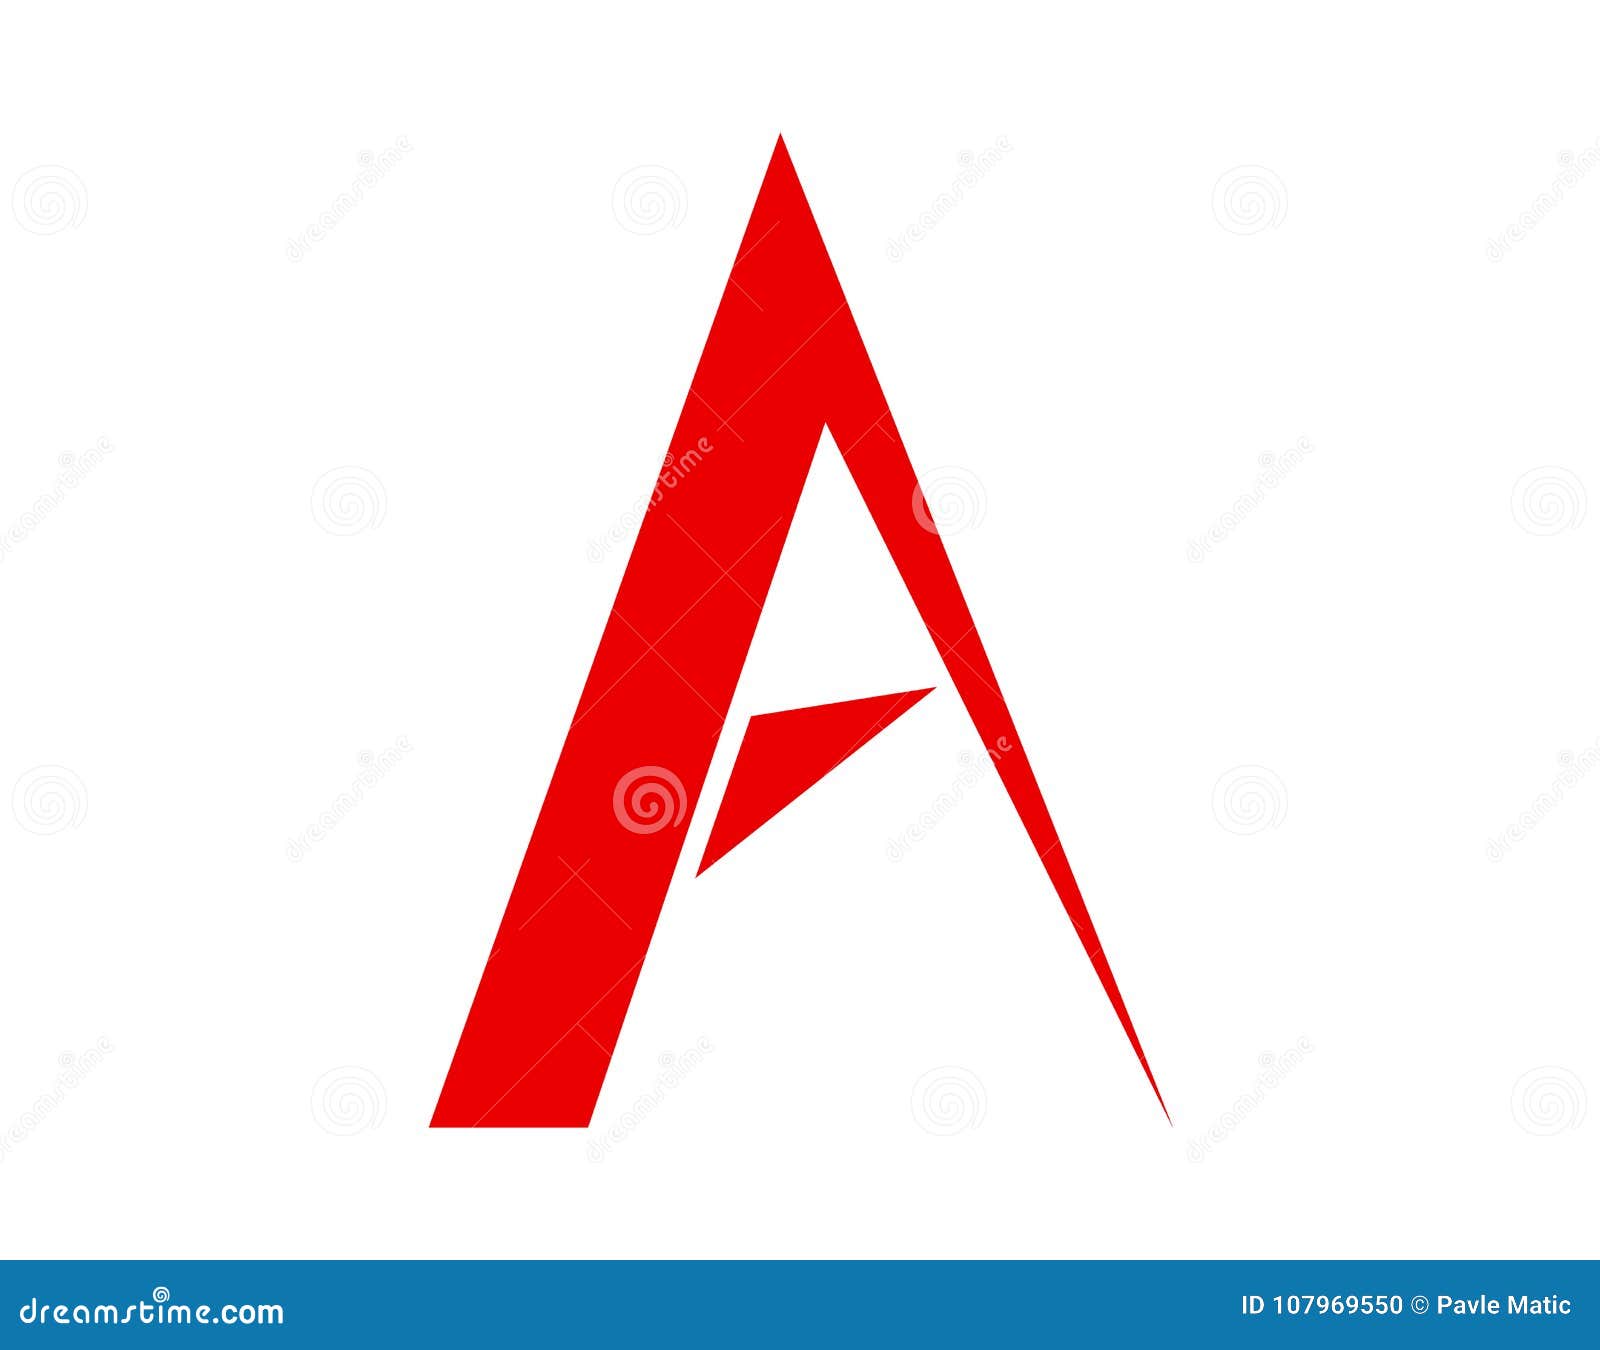 Sharp edges a logo stock vector. Illustration of simple - 107969550